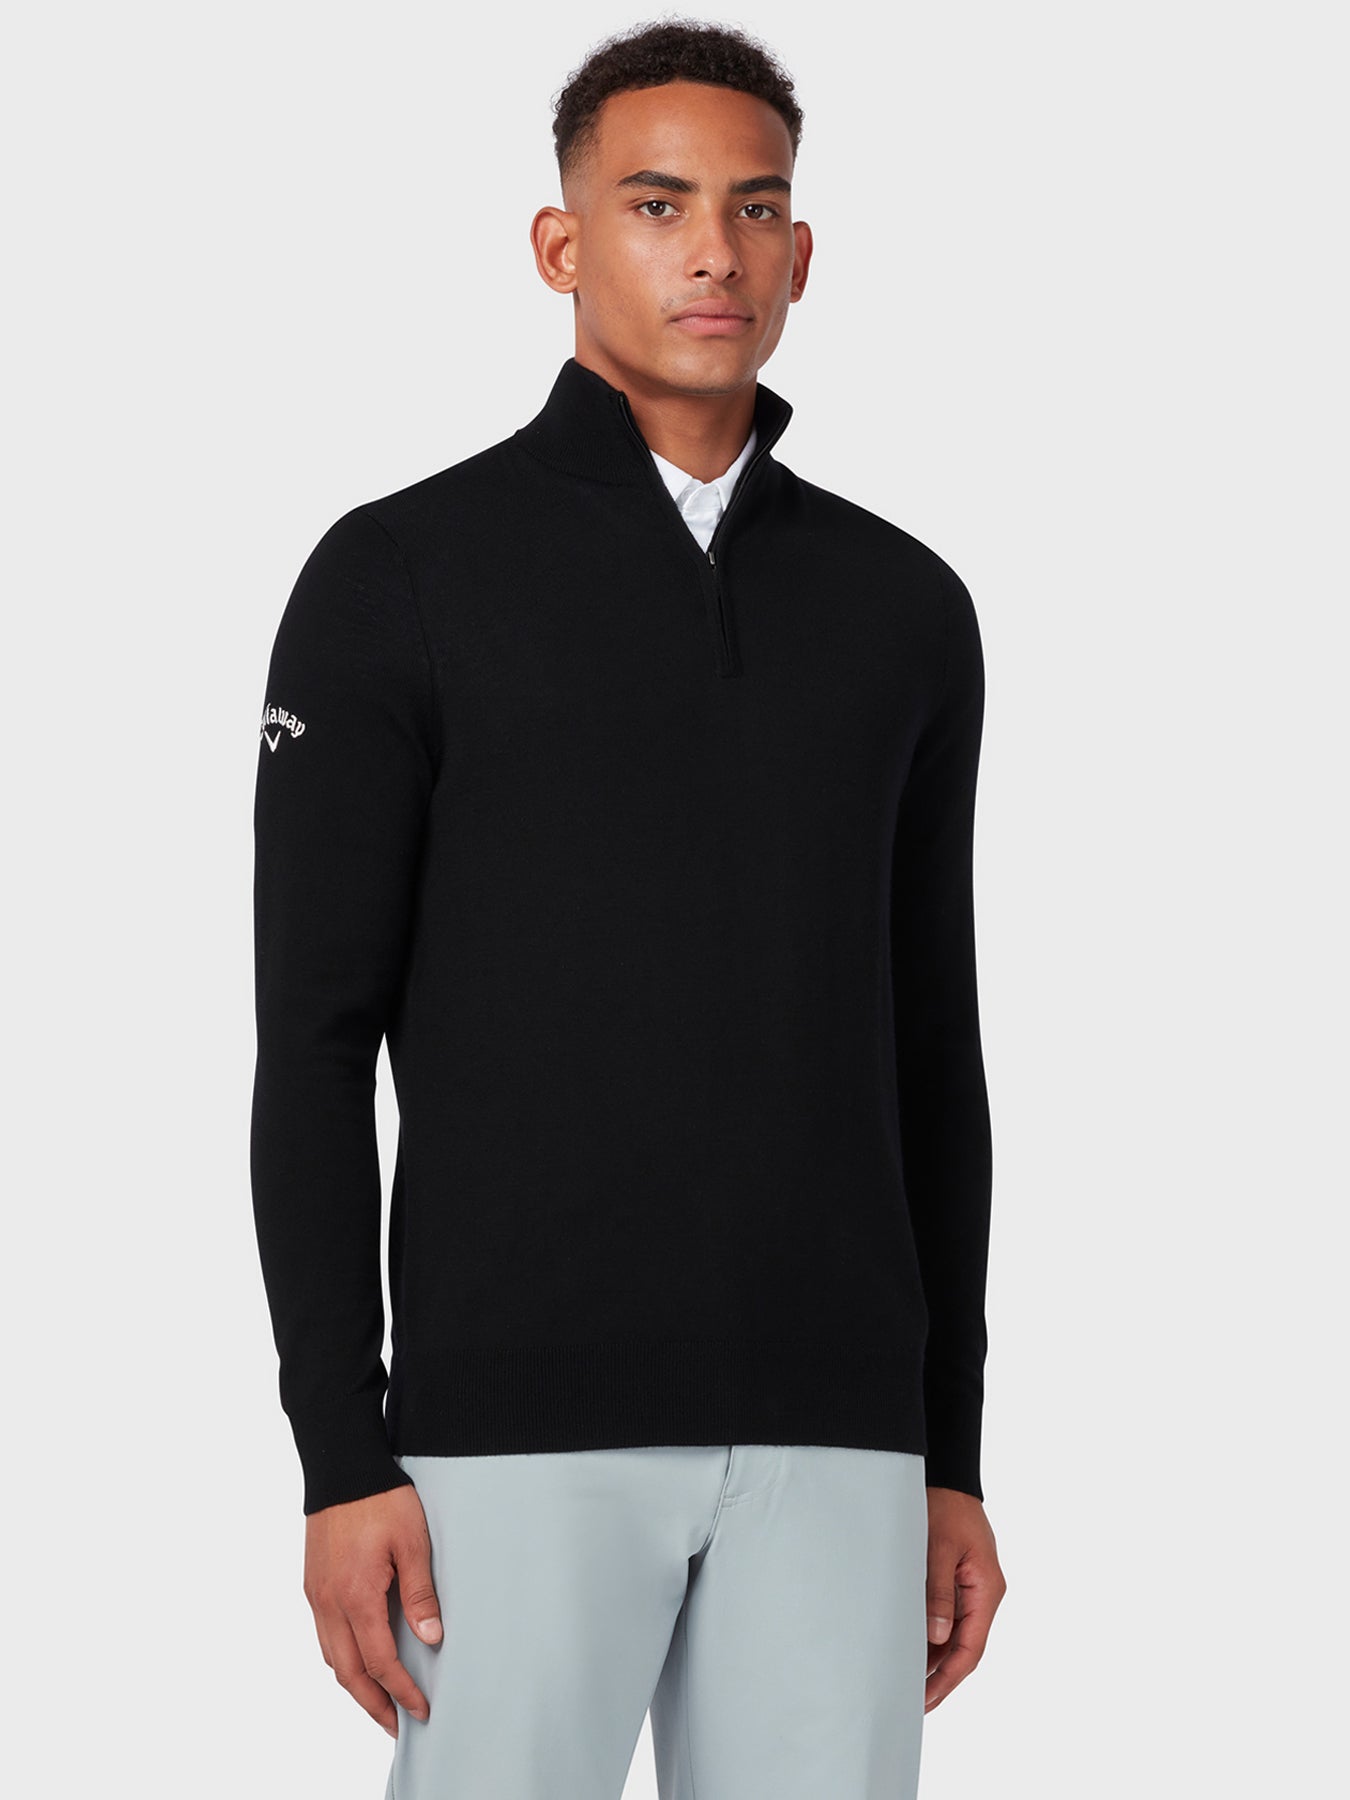 View Thermal Merino Wool Quarter Zip Sweater In Black Onyx information